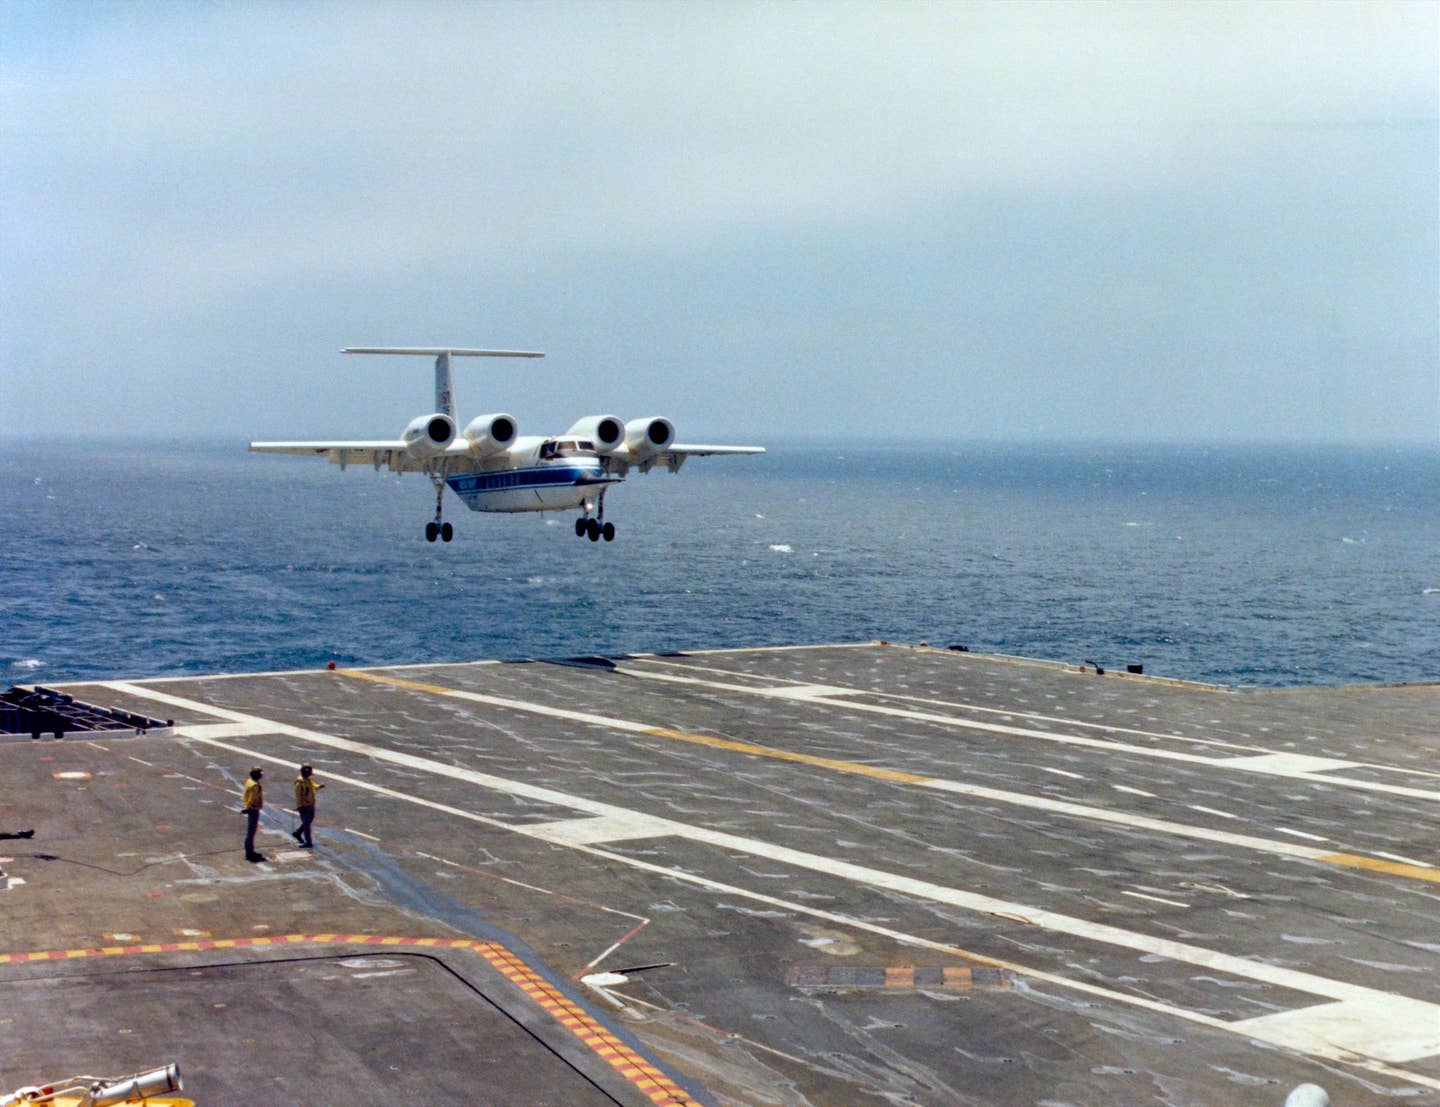 The QSRA during takeoff and landing trials onboard the USS <em>Kitty Hawk</em> in 1980. <em>NASA</em>